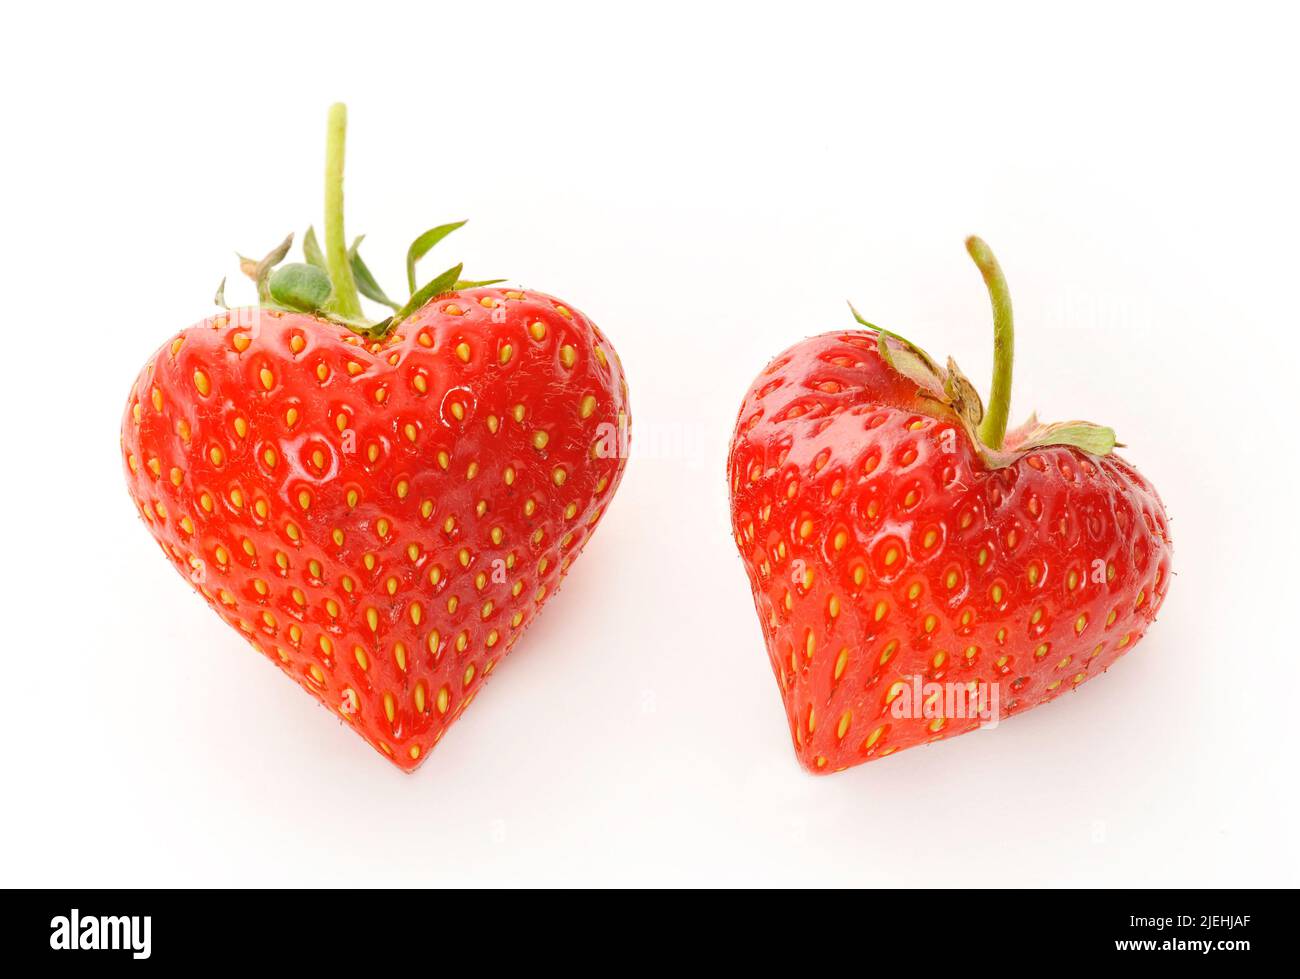 Zwei Erdbeeren in Herzform, eine Laune der Natur, Erdbeere, Stock Photo